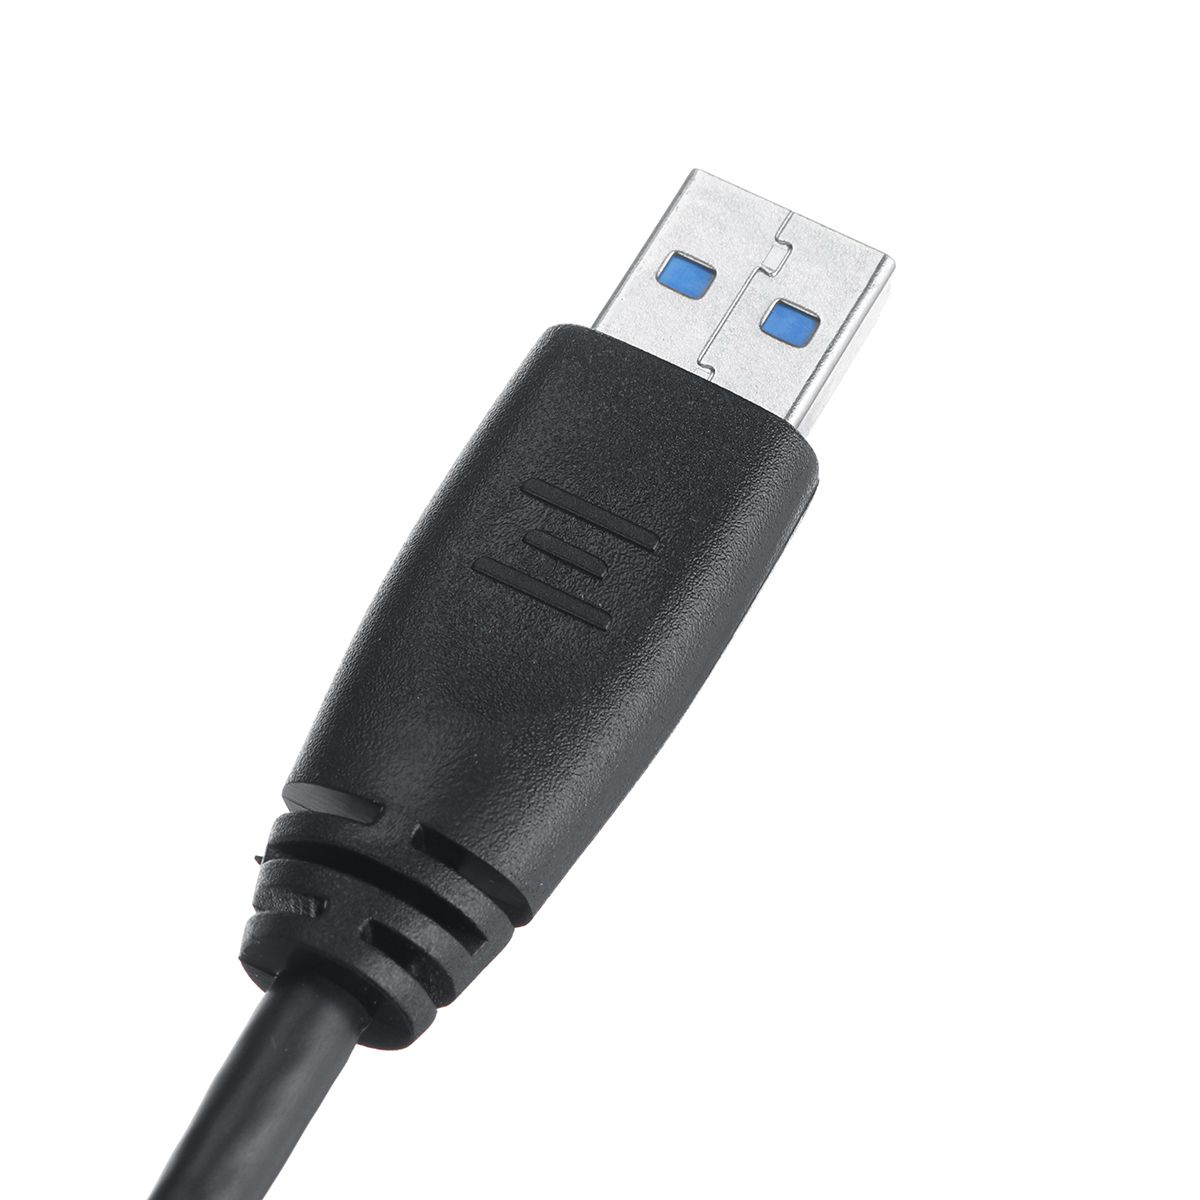 Optical-Drive-Type-C-USB-30-Flat-Brushed-External-DVD-Burner-for-PC-Laptop-1688483